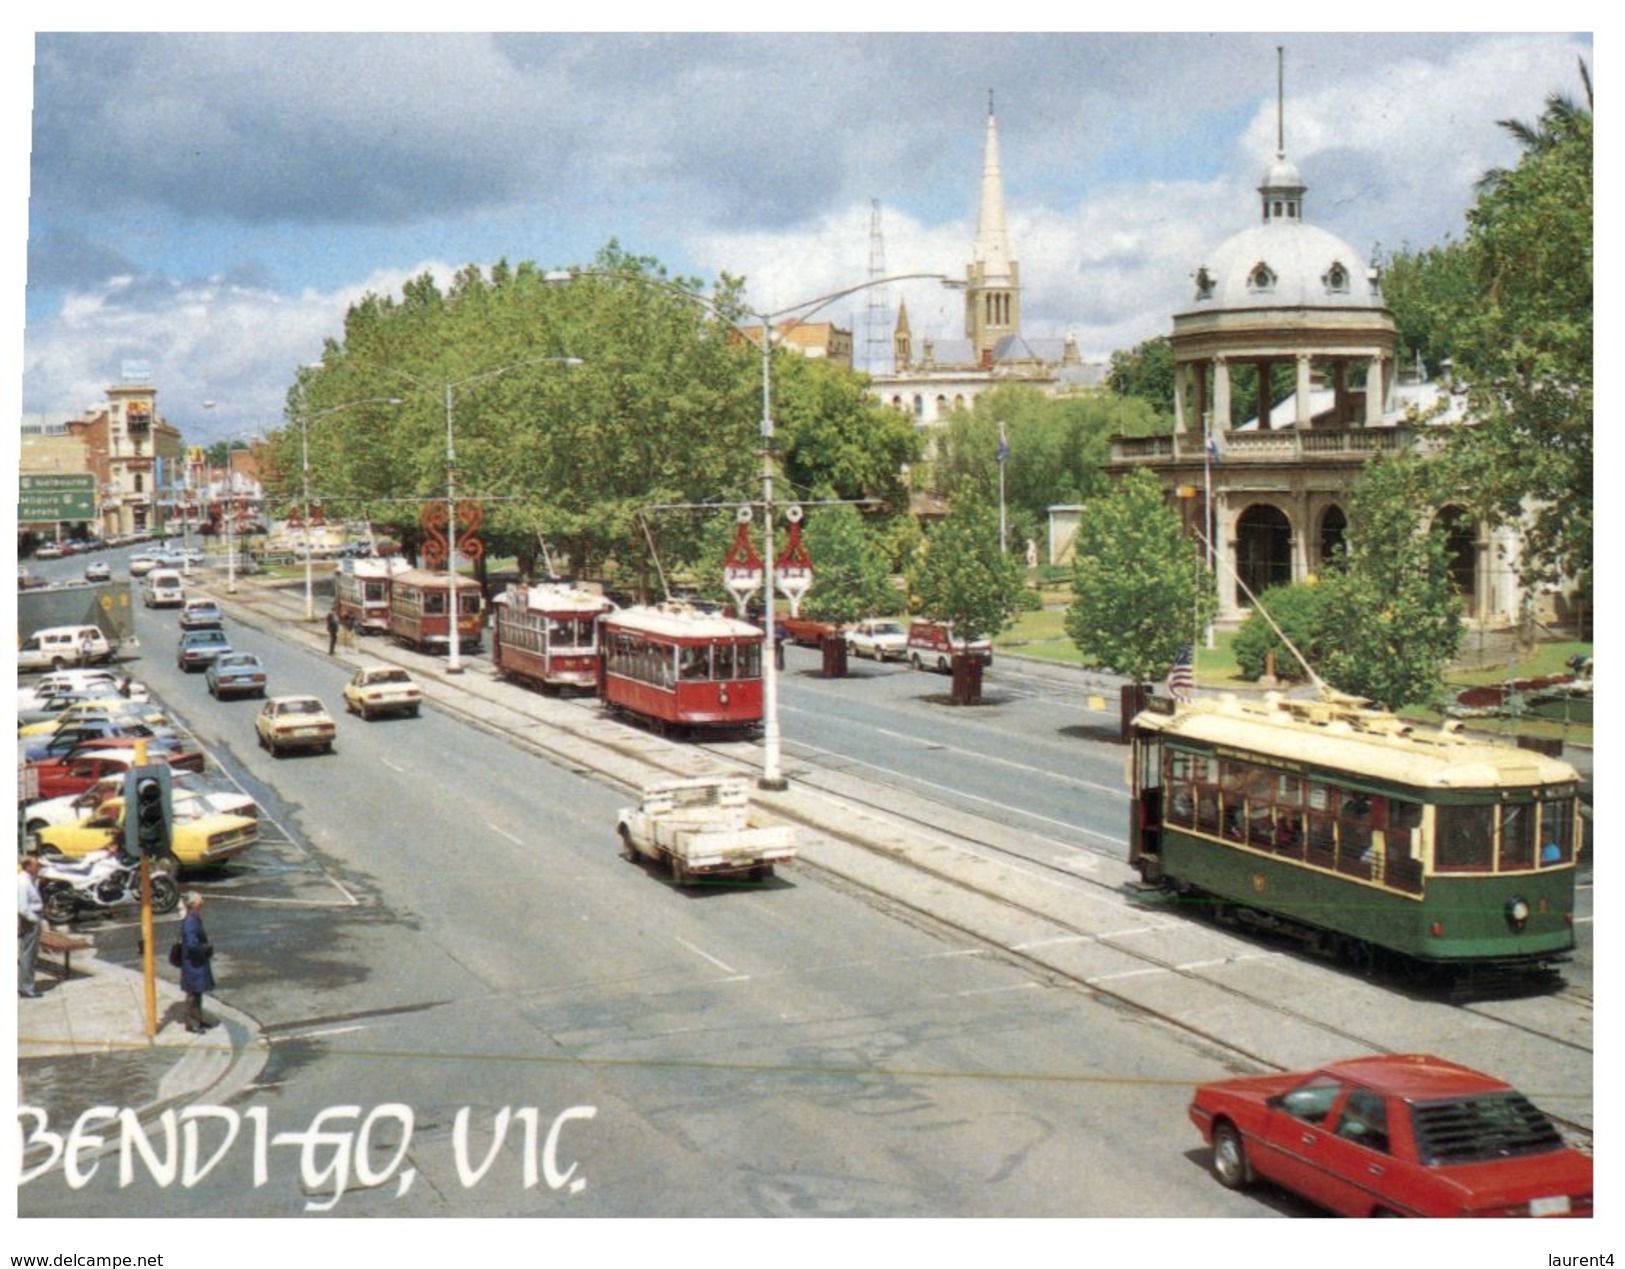 (169) Australia - VIC - Bendigo And Tramway - Bendigo